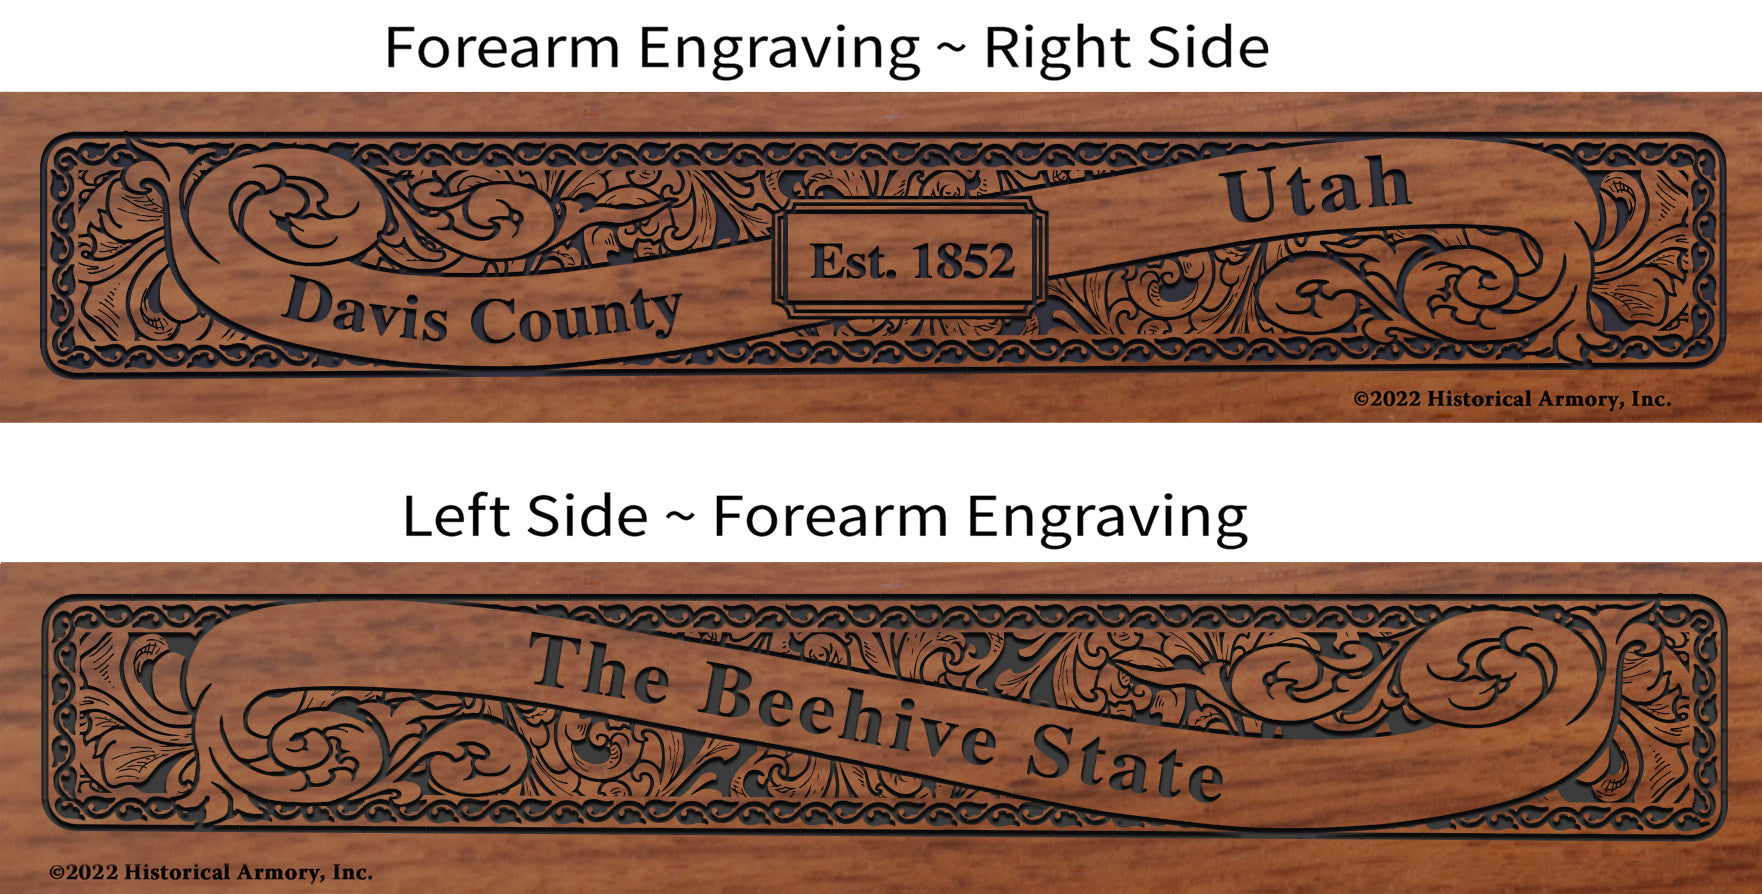 Davis County Utah Engraved Rifle Forearm